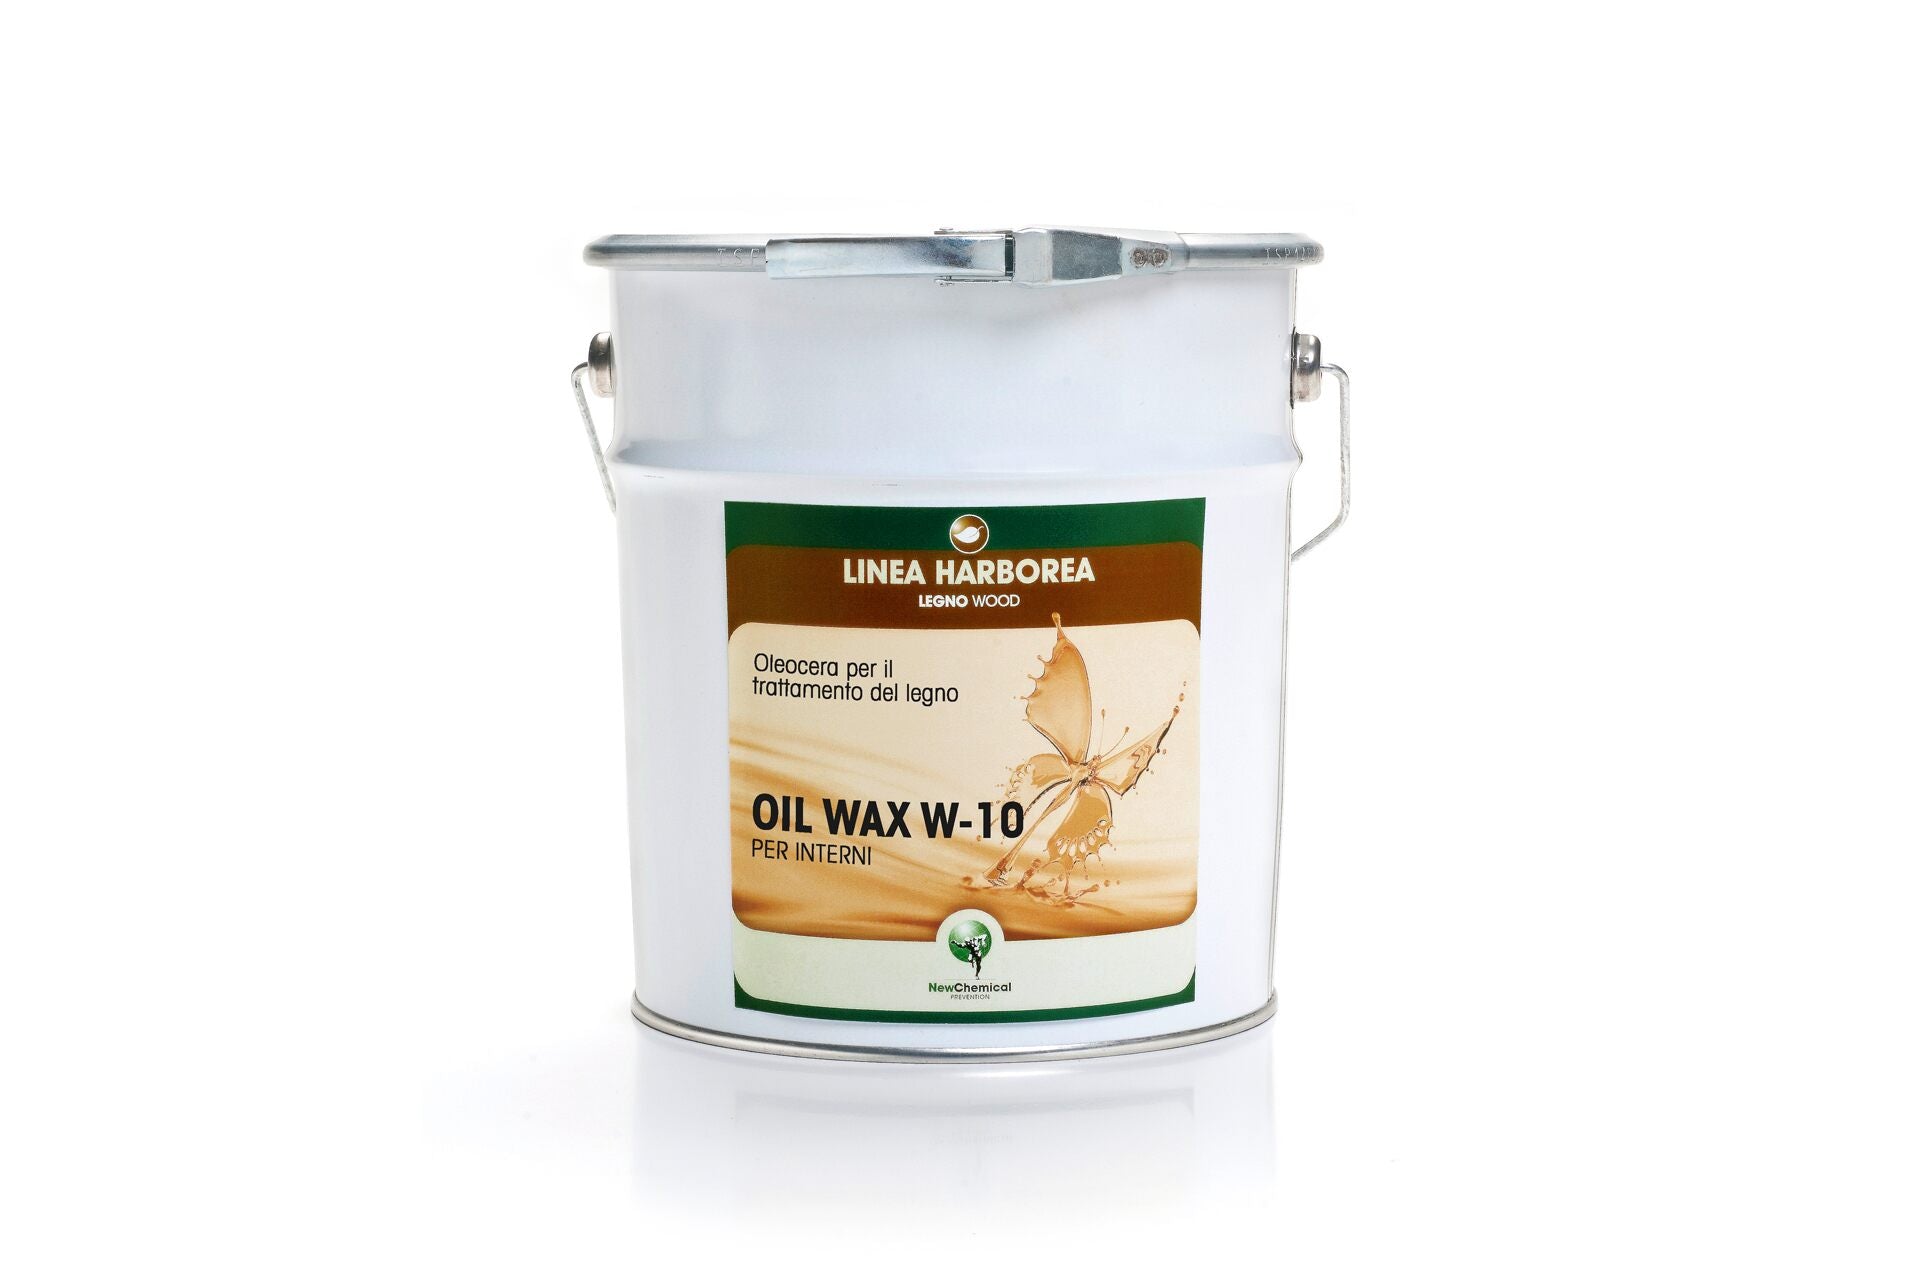 Oil Wax W-10